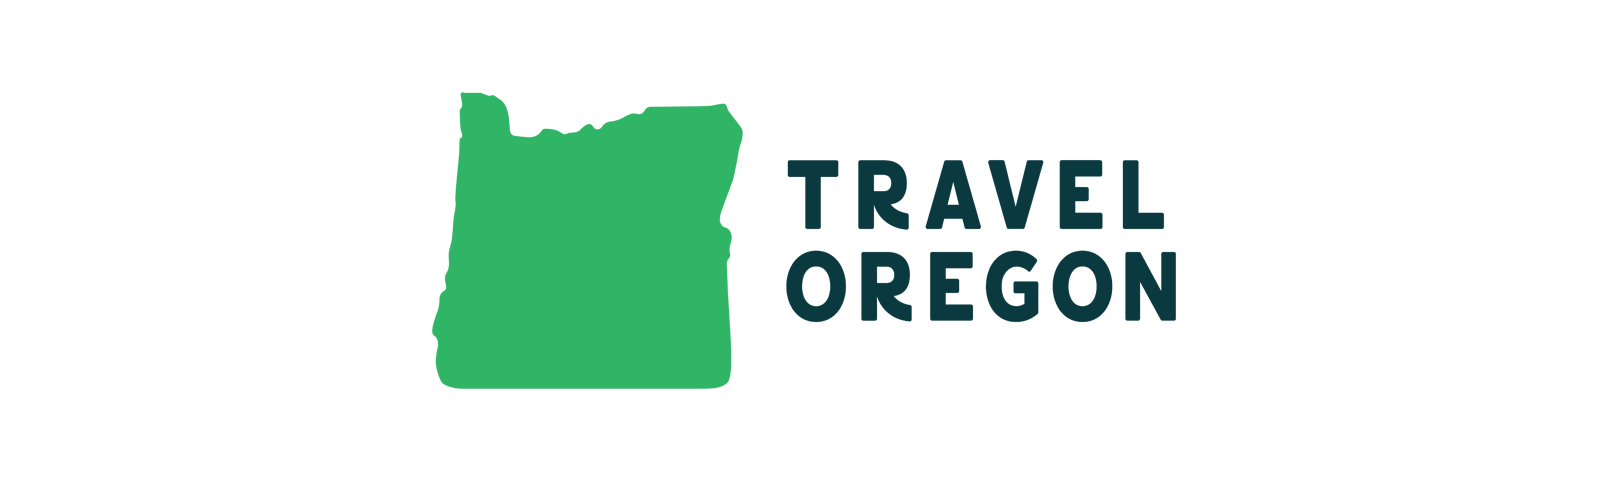 Travel_Oregon_Webinar_ABC-Site_Header_Placeholder_1600x489